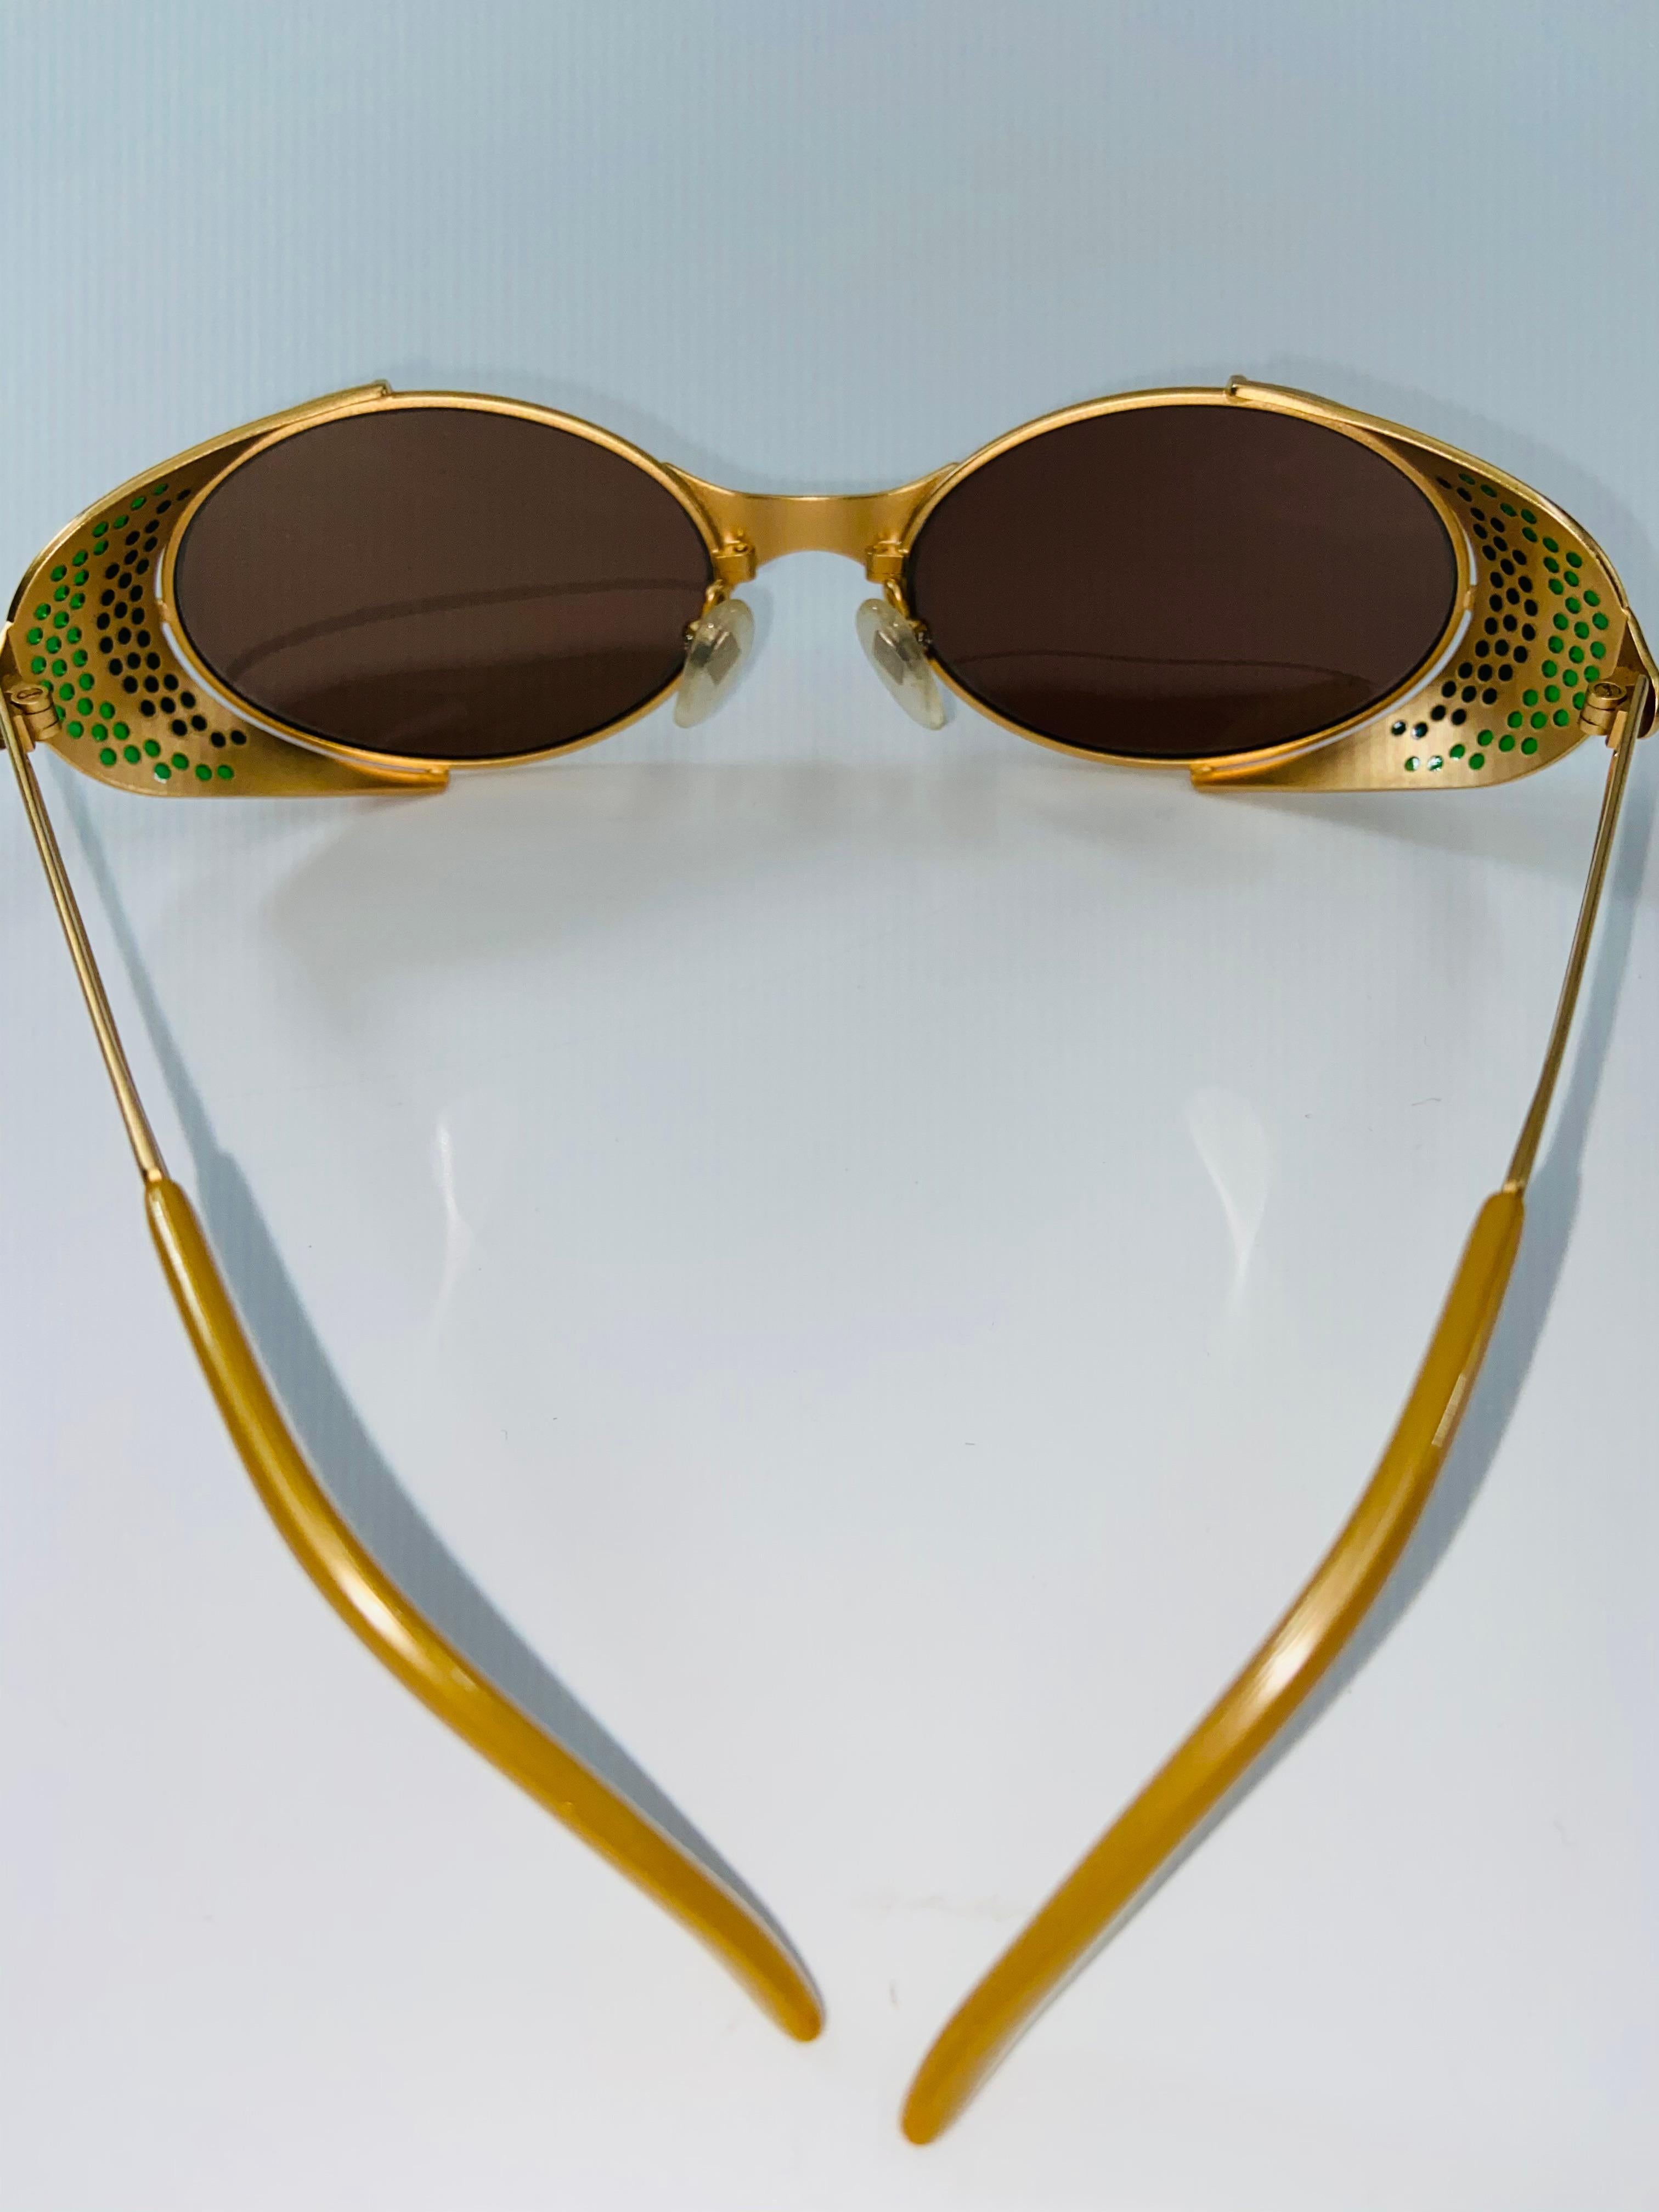 Jean Paul Gaultier Rare Vintage Green Enamel & Gold Steampunk Sunglasses For Sale 4